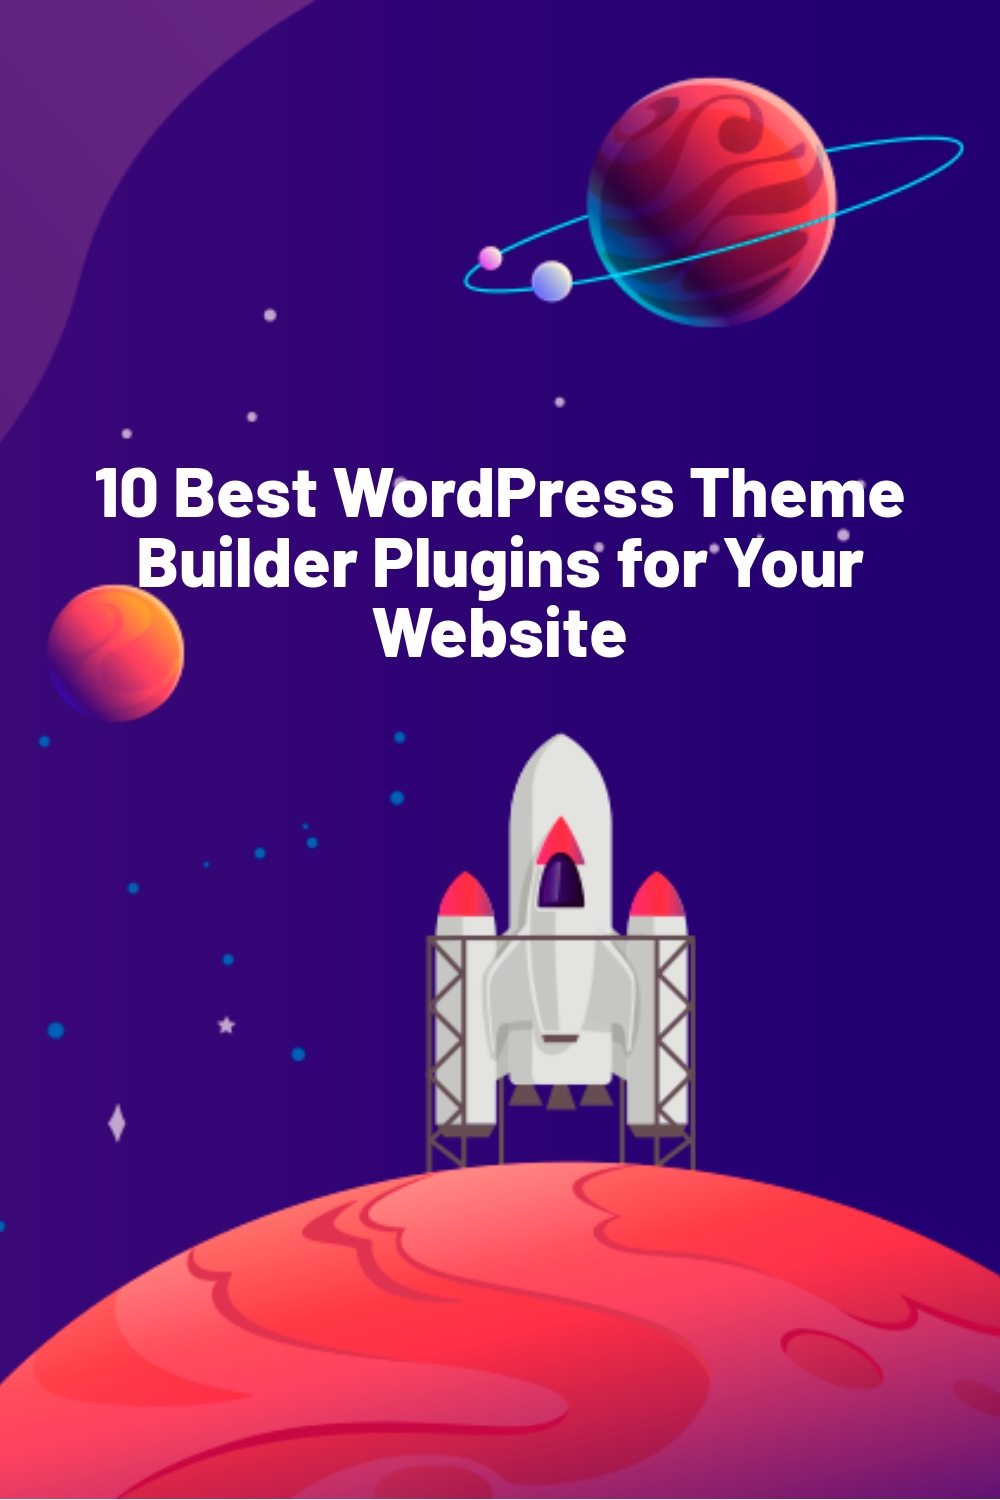 10 Best WordPress Theme Builder Plugins for Your Website